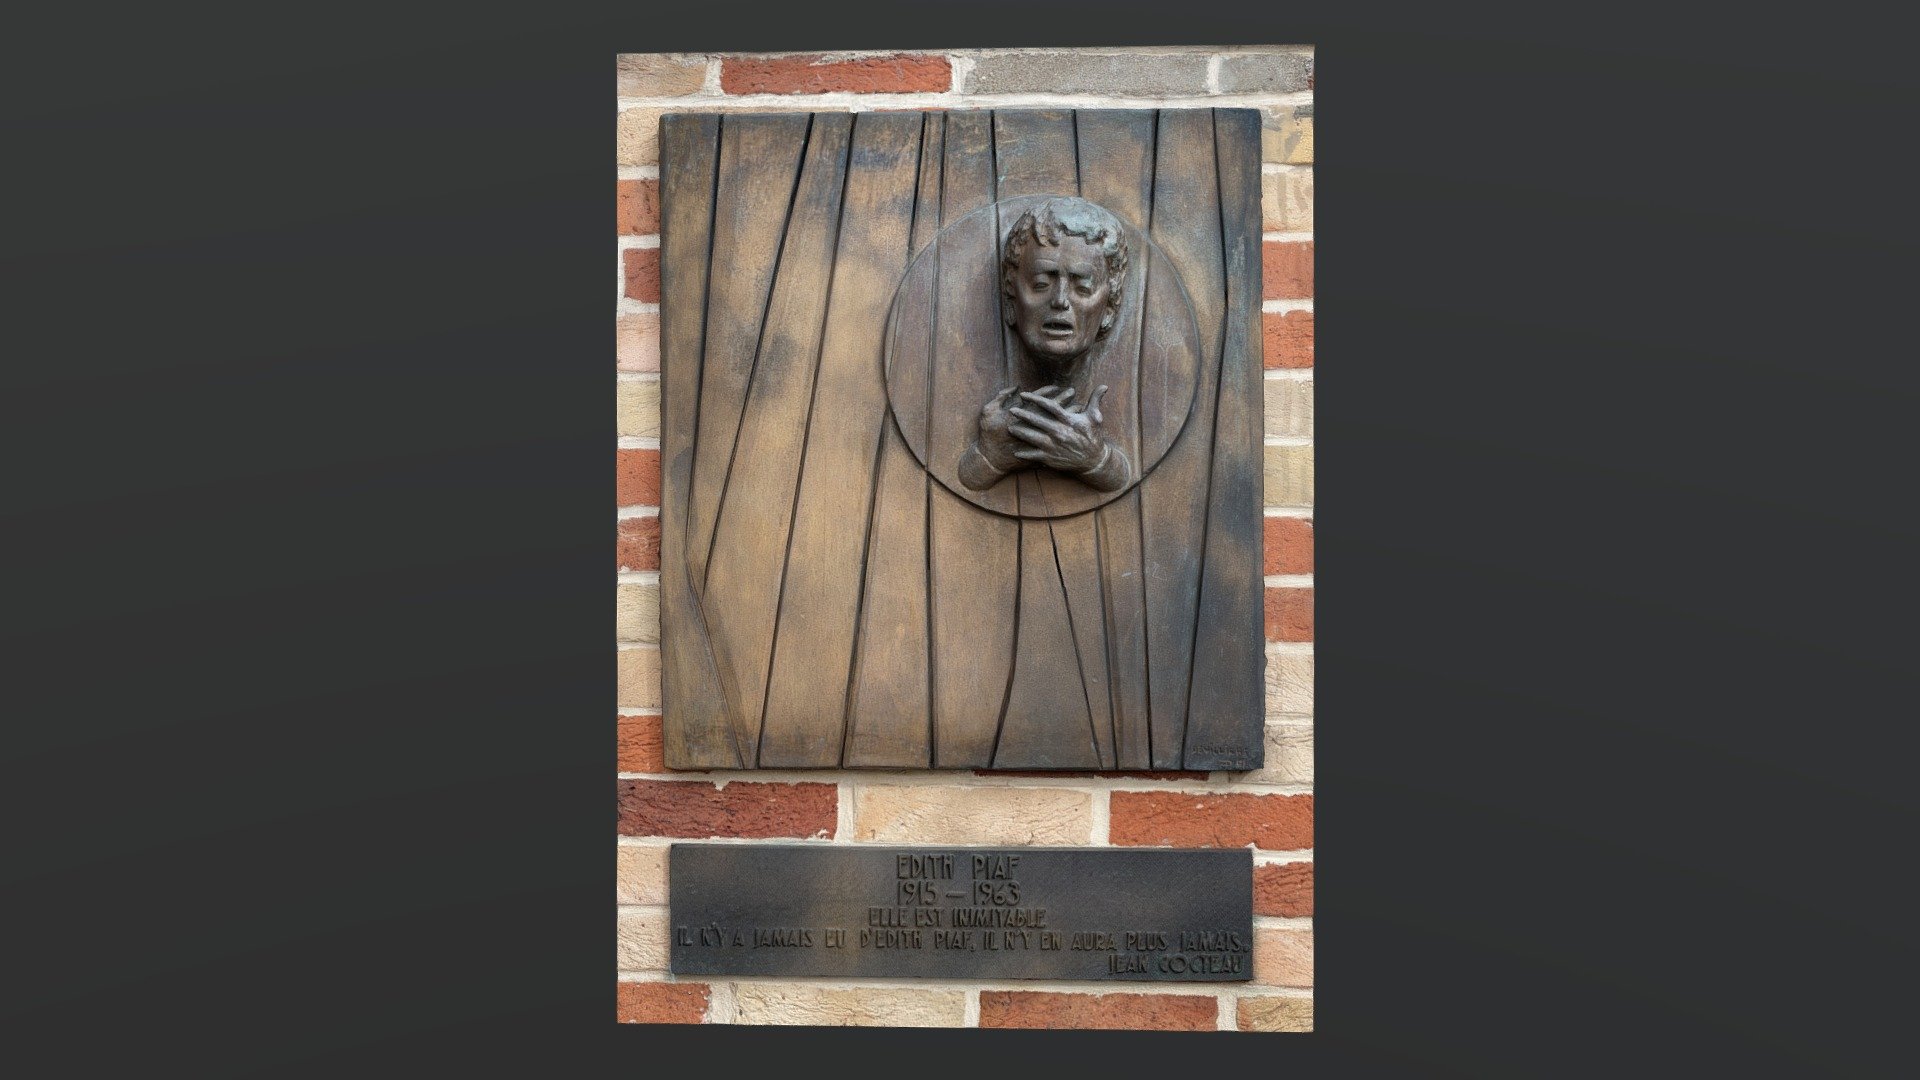 Commemorative plaque for Edith Piaf